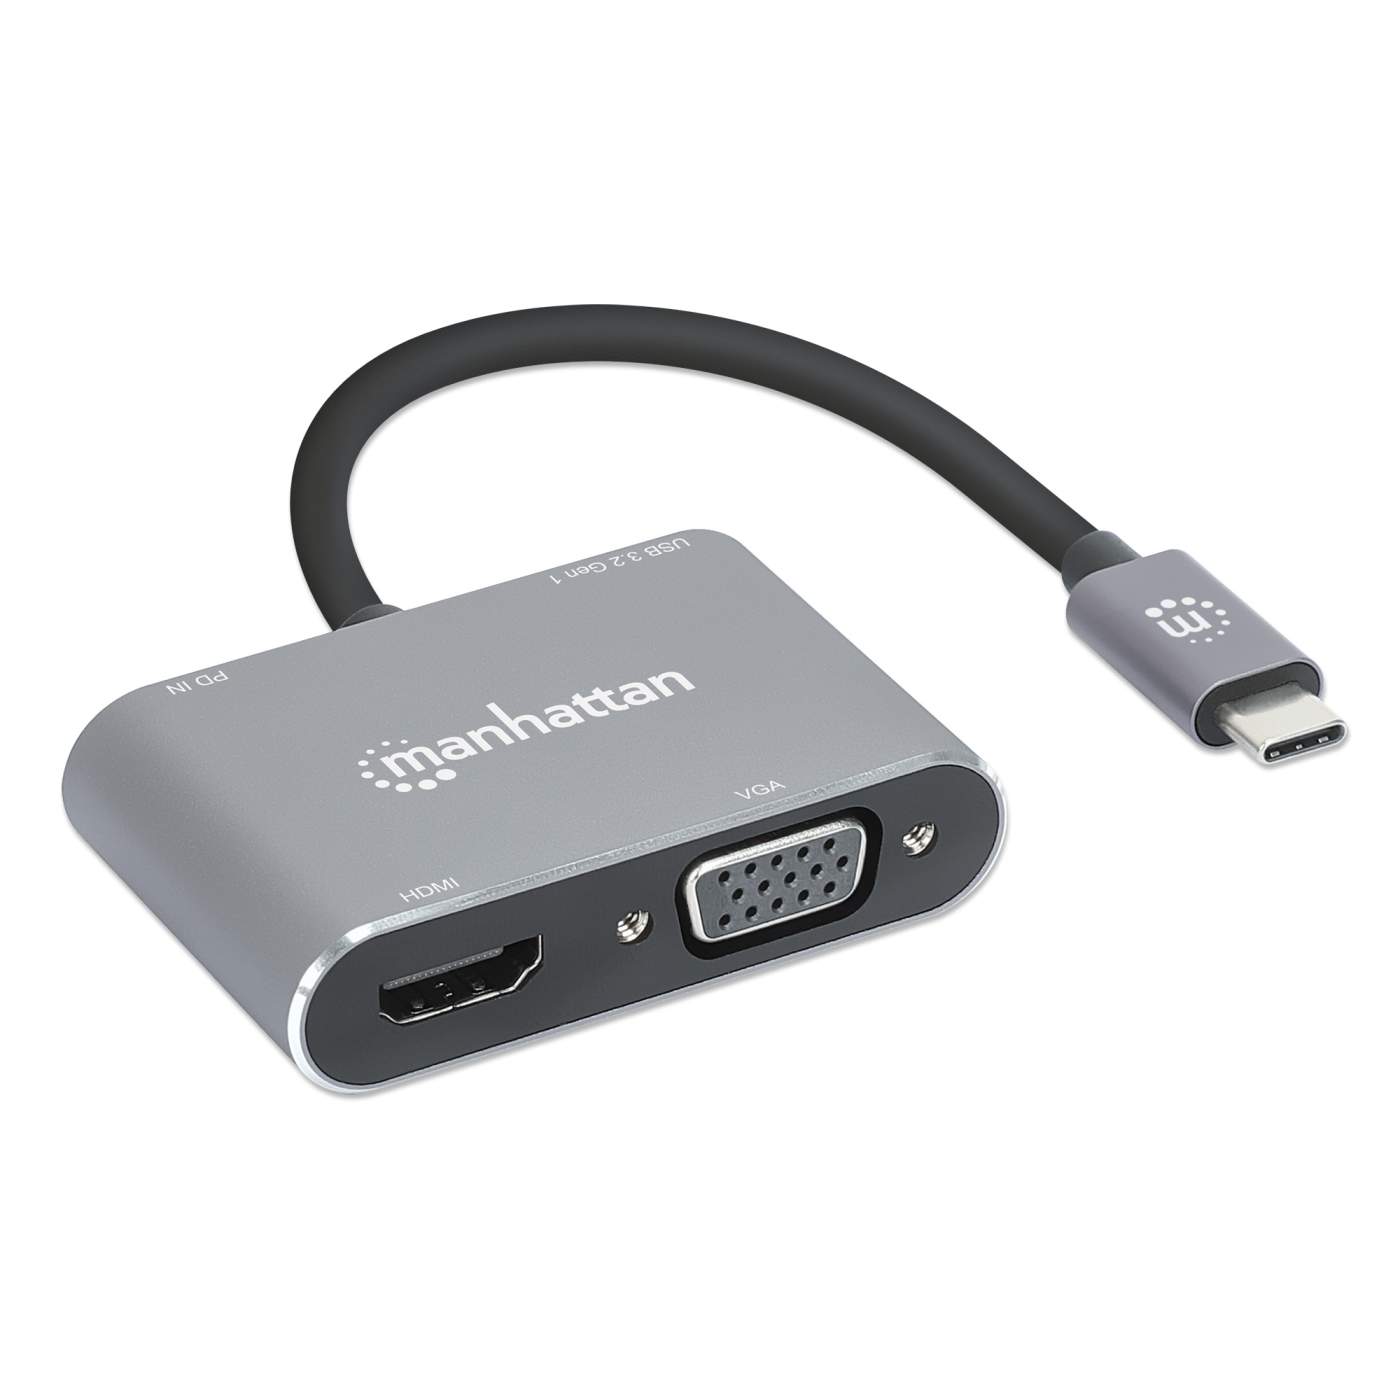 Concentrateur USB-C 11 en 1 - 4x USB 3.0, Audio, VGA, HDMI, LAN